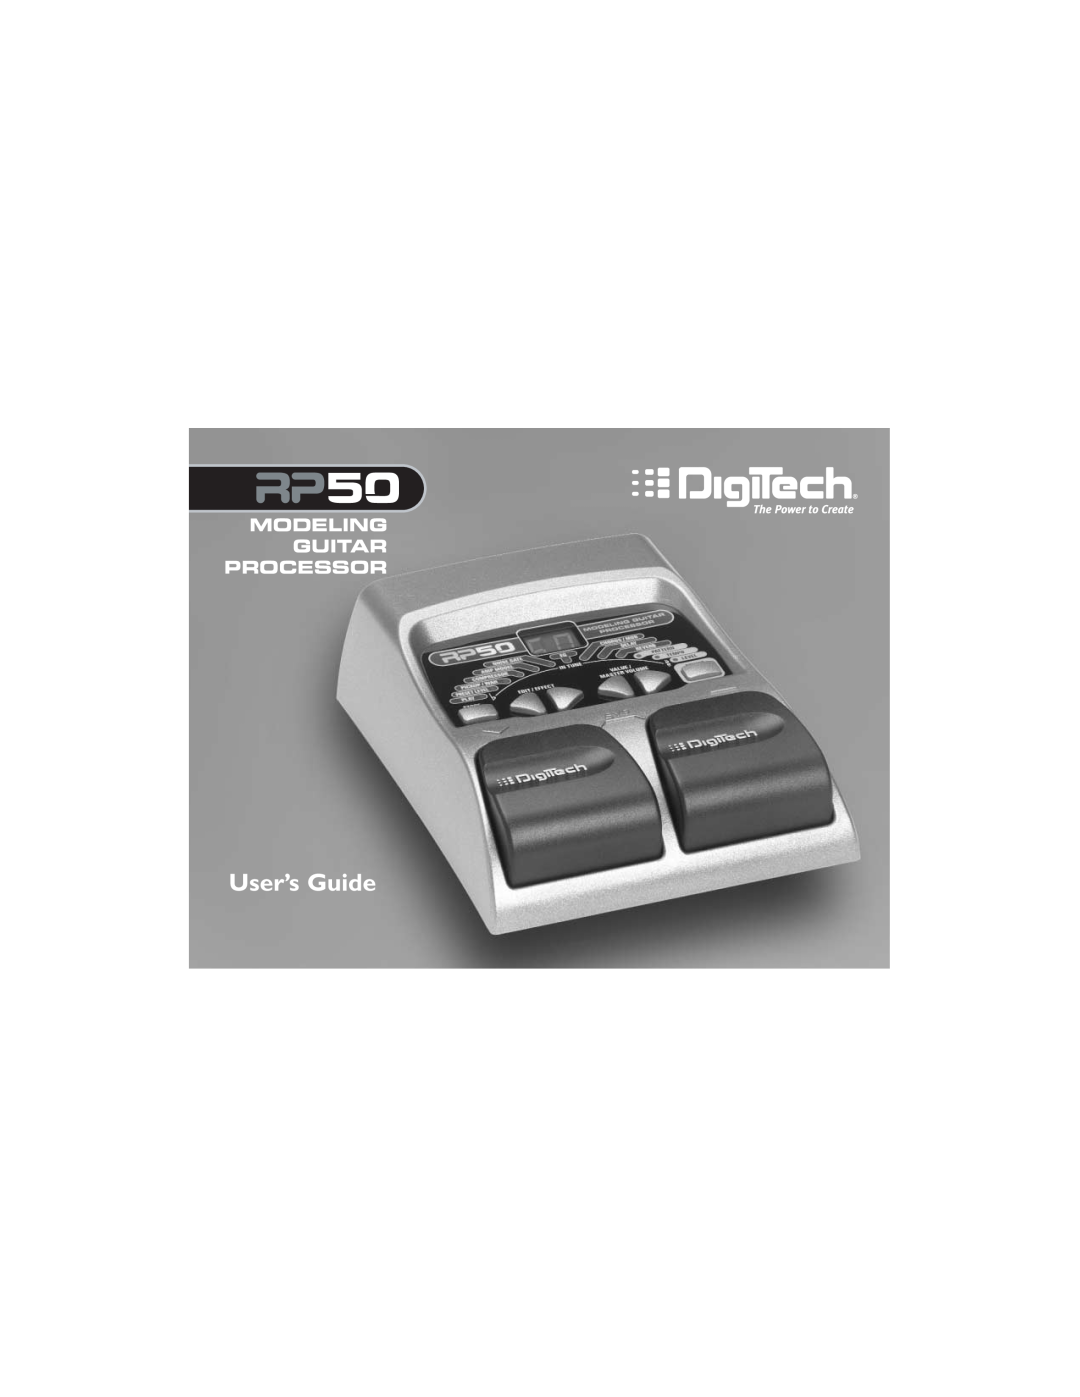 DigiTech RP50 manual User’s Guide, Modeling Guitar Processor 